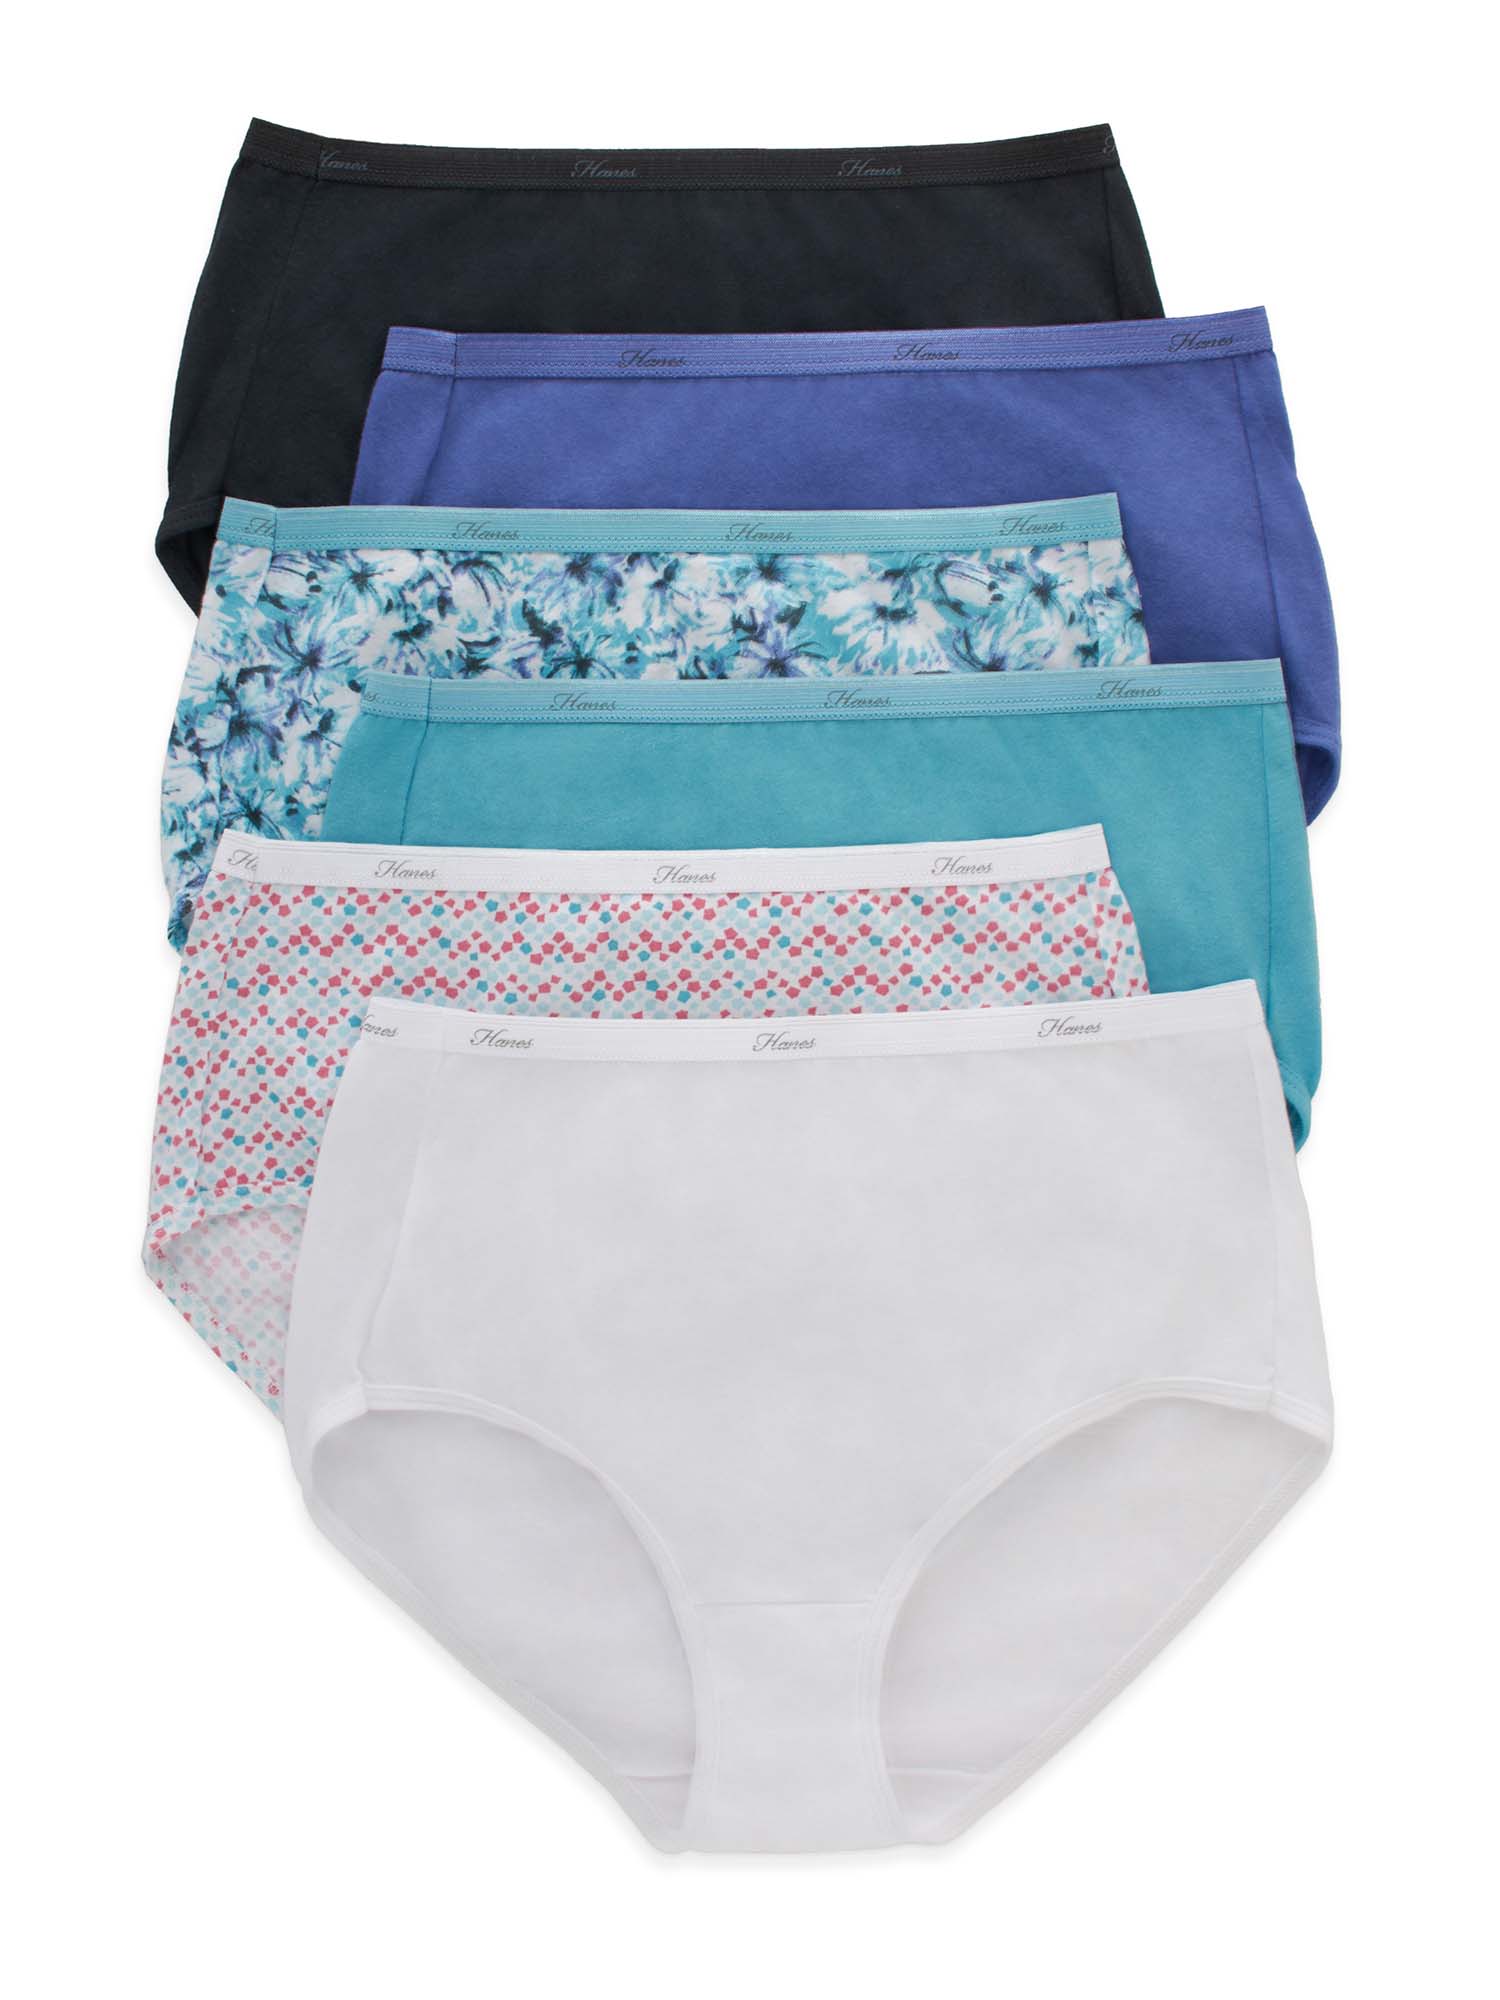 Hanes Women's Cool Comfort Cotton Brief Underwear, 6-Pack - image 1 of 7